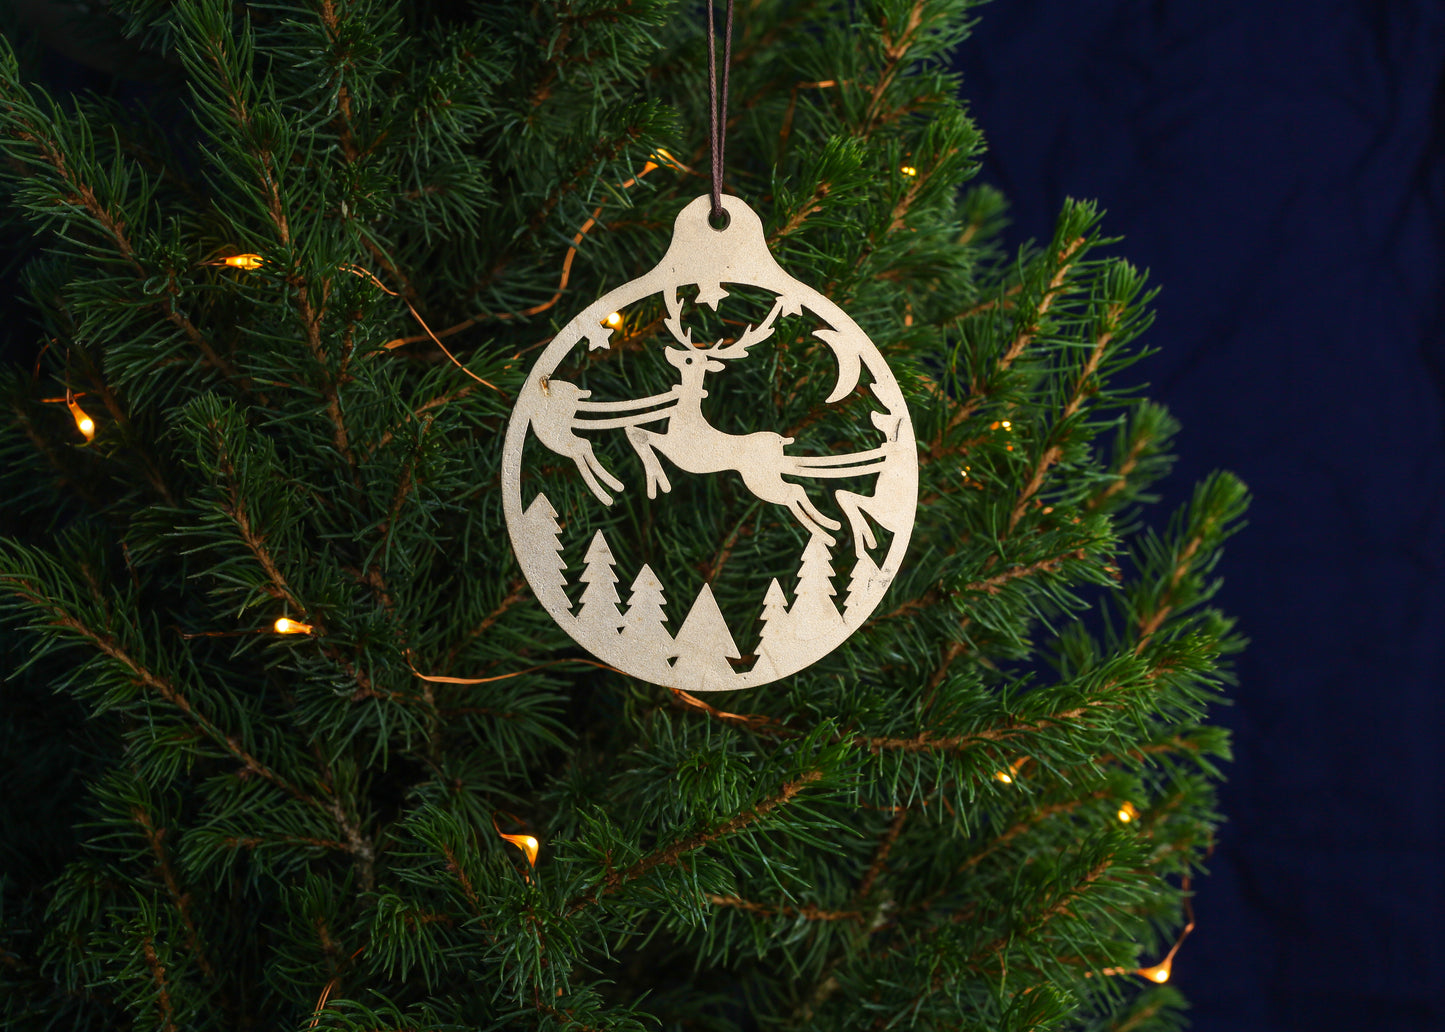 Christmas Tree Decoration